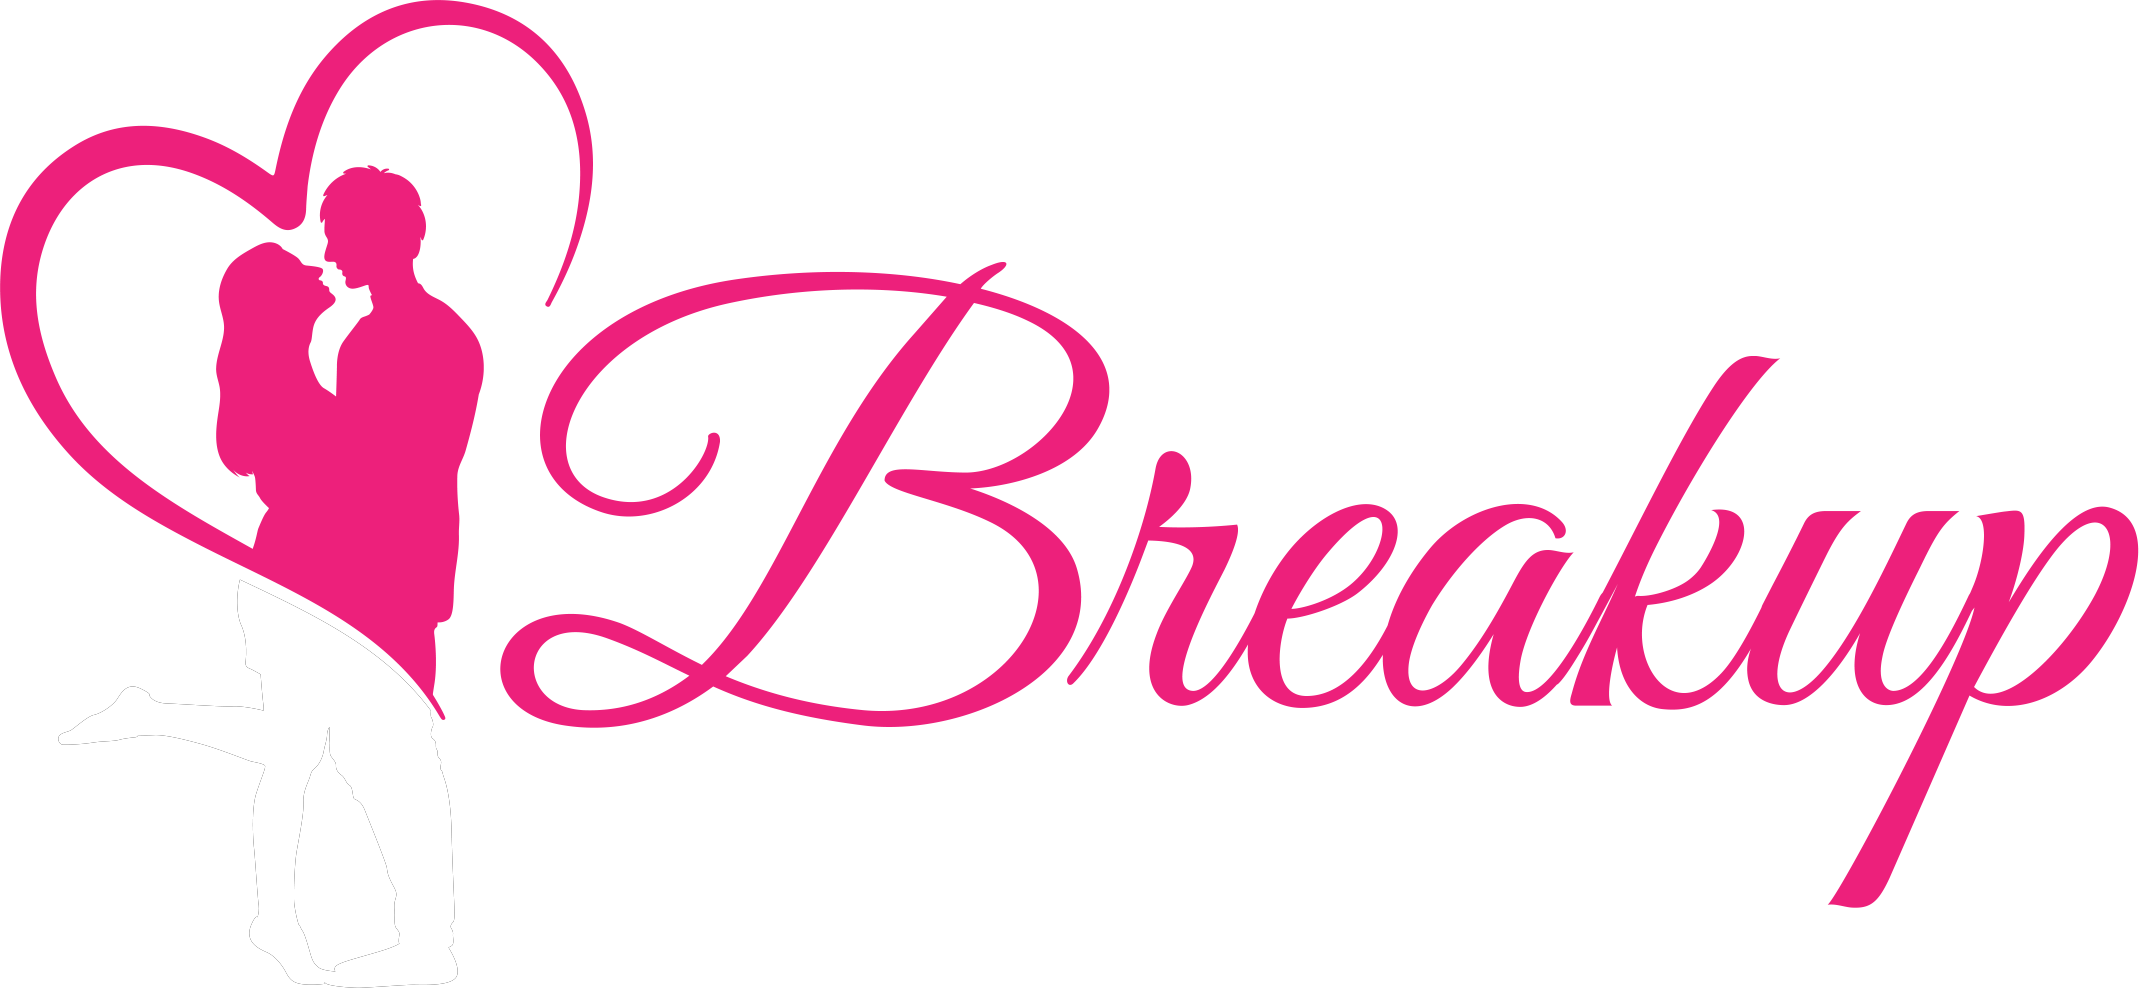 The Breakup Corner